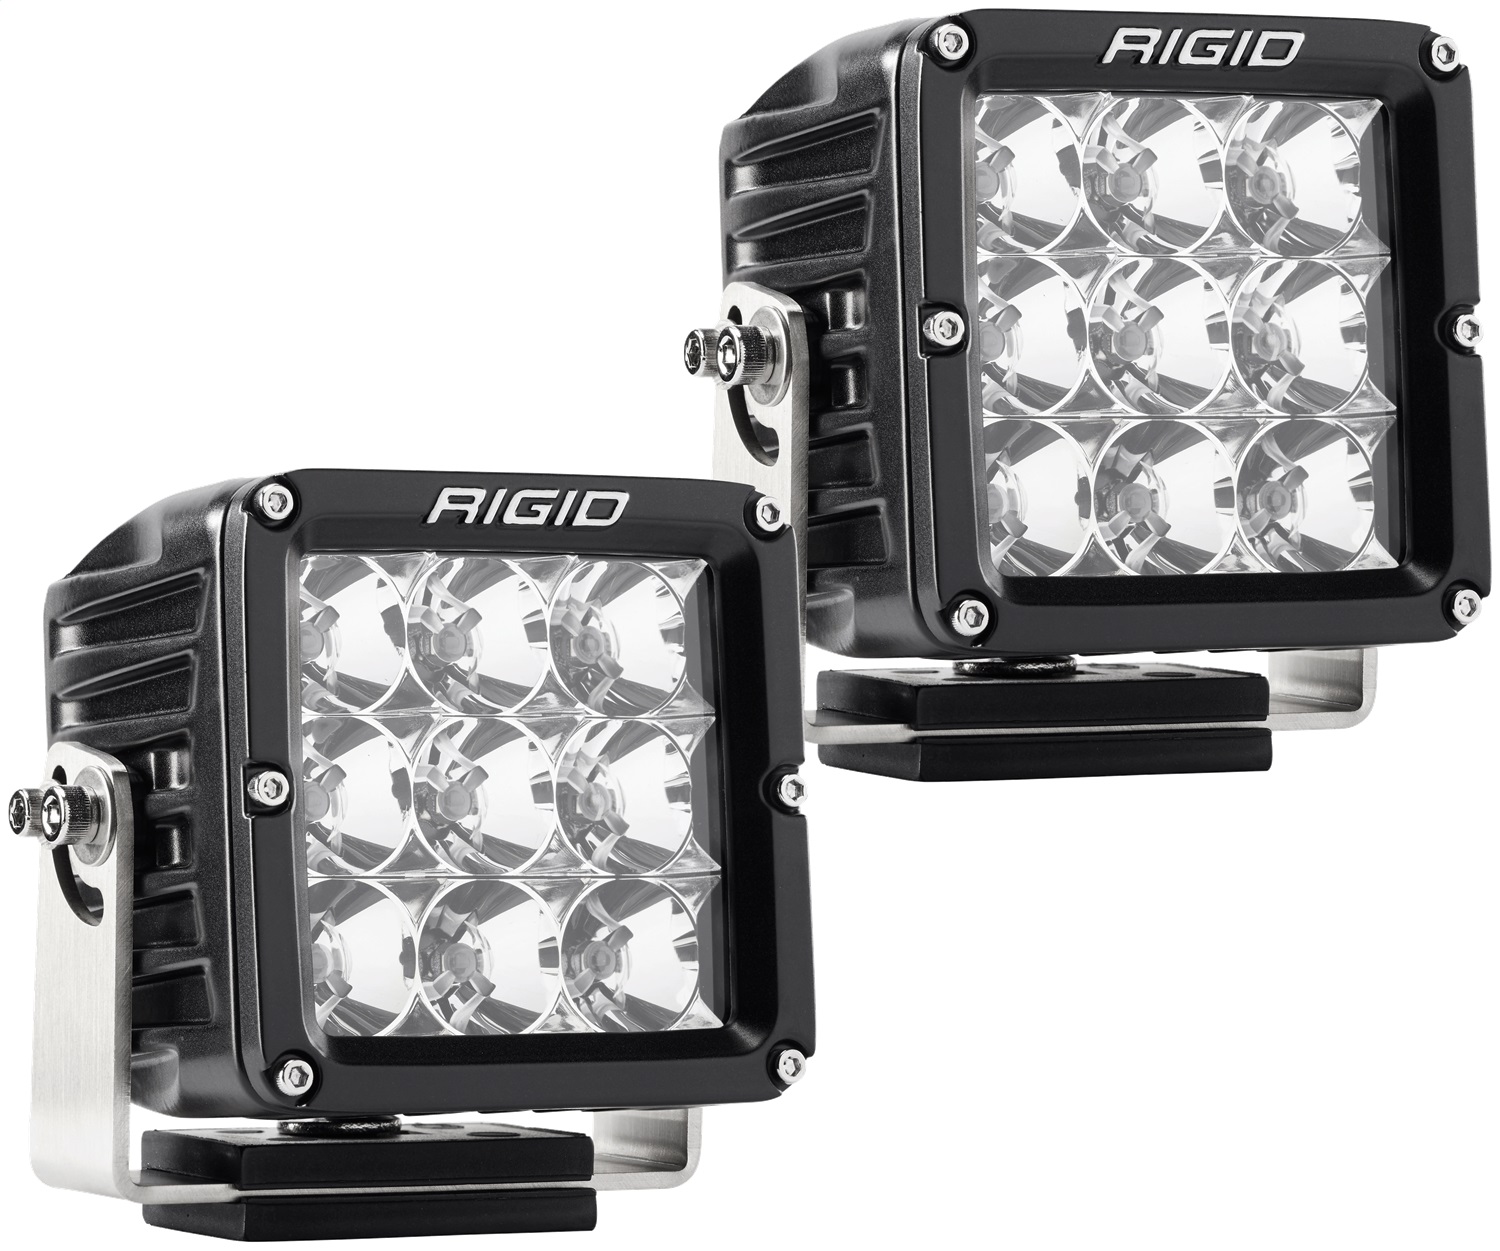 RIGID D-XL PRO LED Light, Flood Optic, Surface Mount, Black Housing, Pair